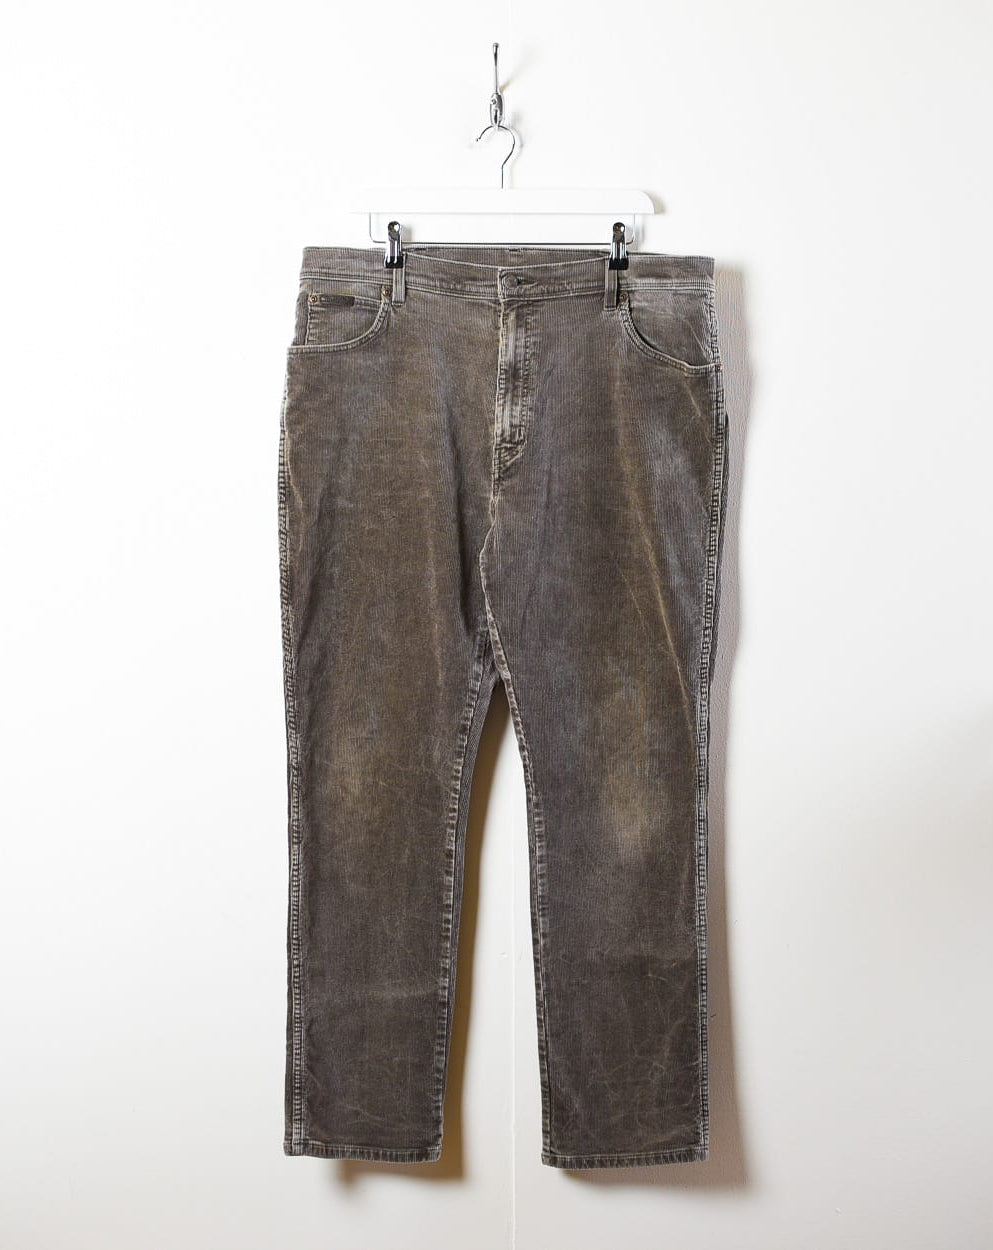 Grey Carhartt Carpenter Jeans - W34 L33